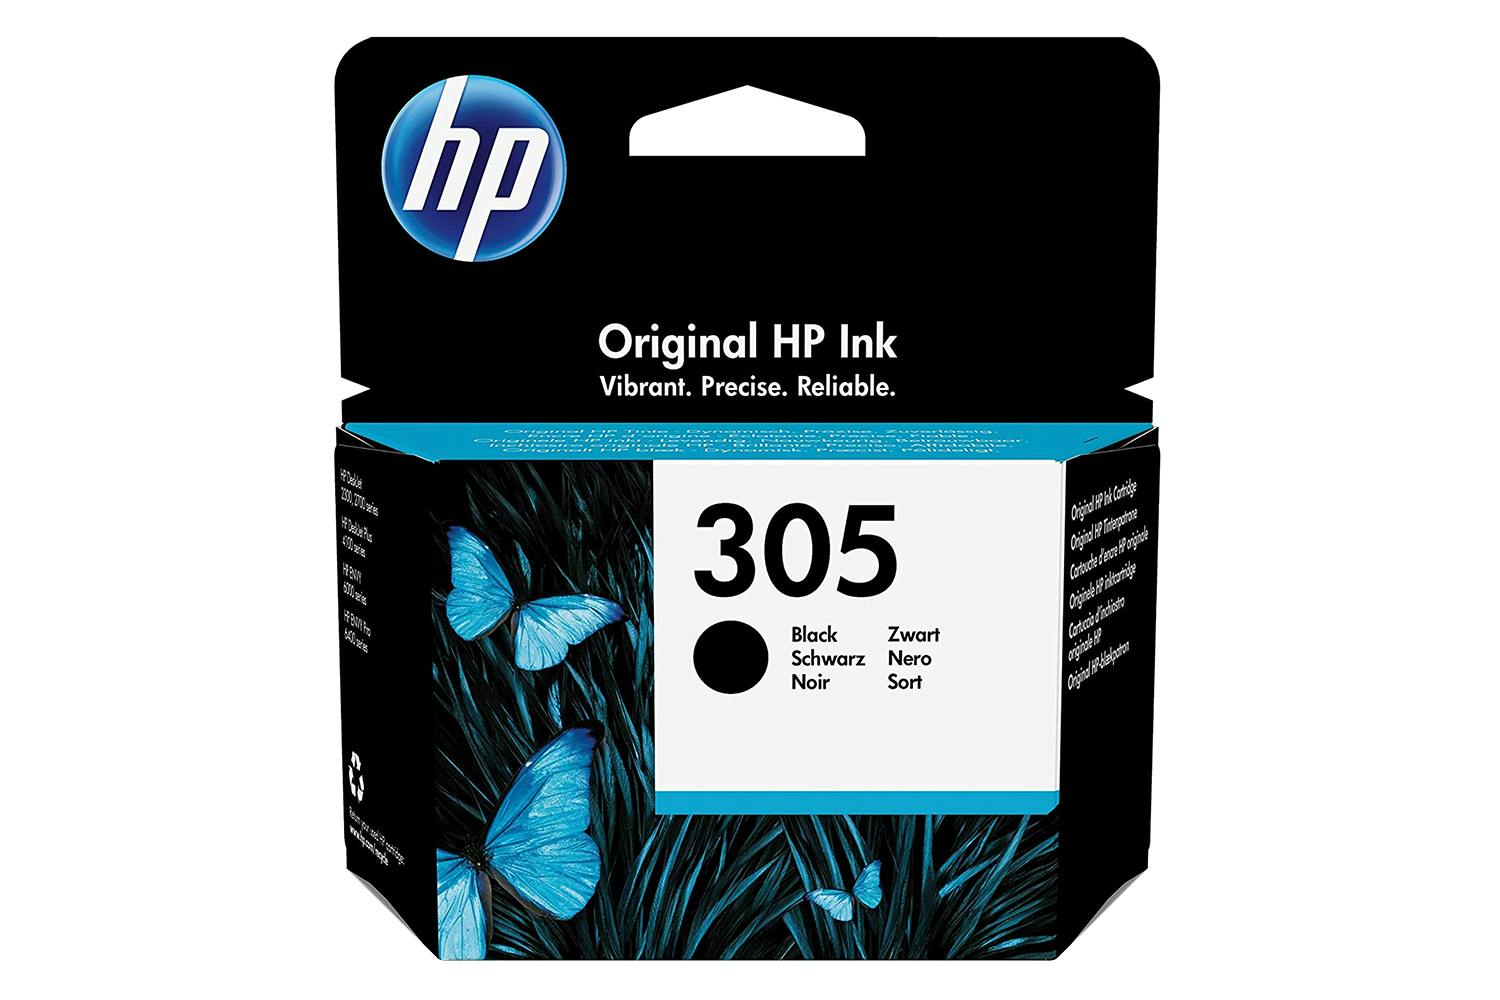 HP 305 Original Ink Cartridge | Black